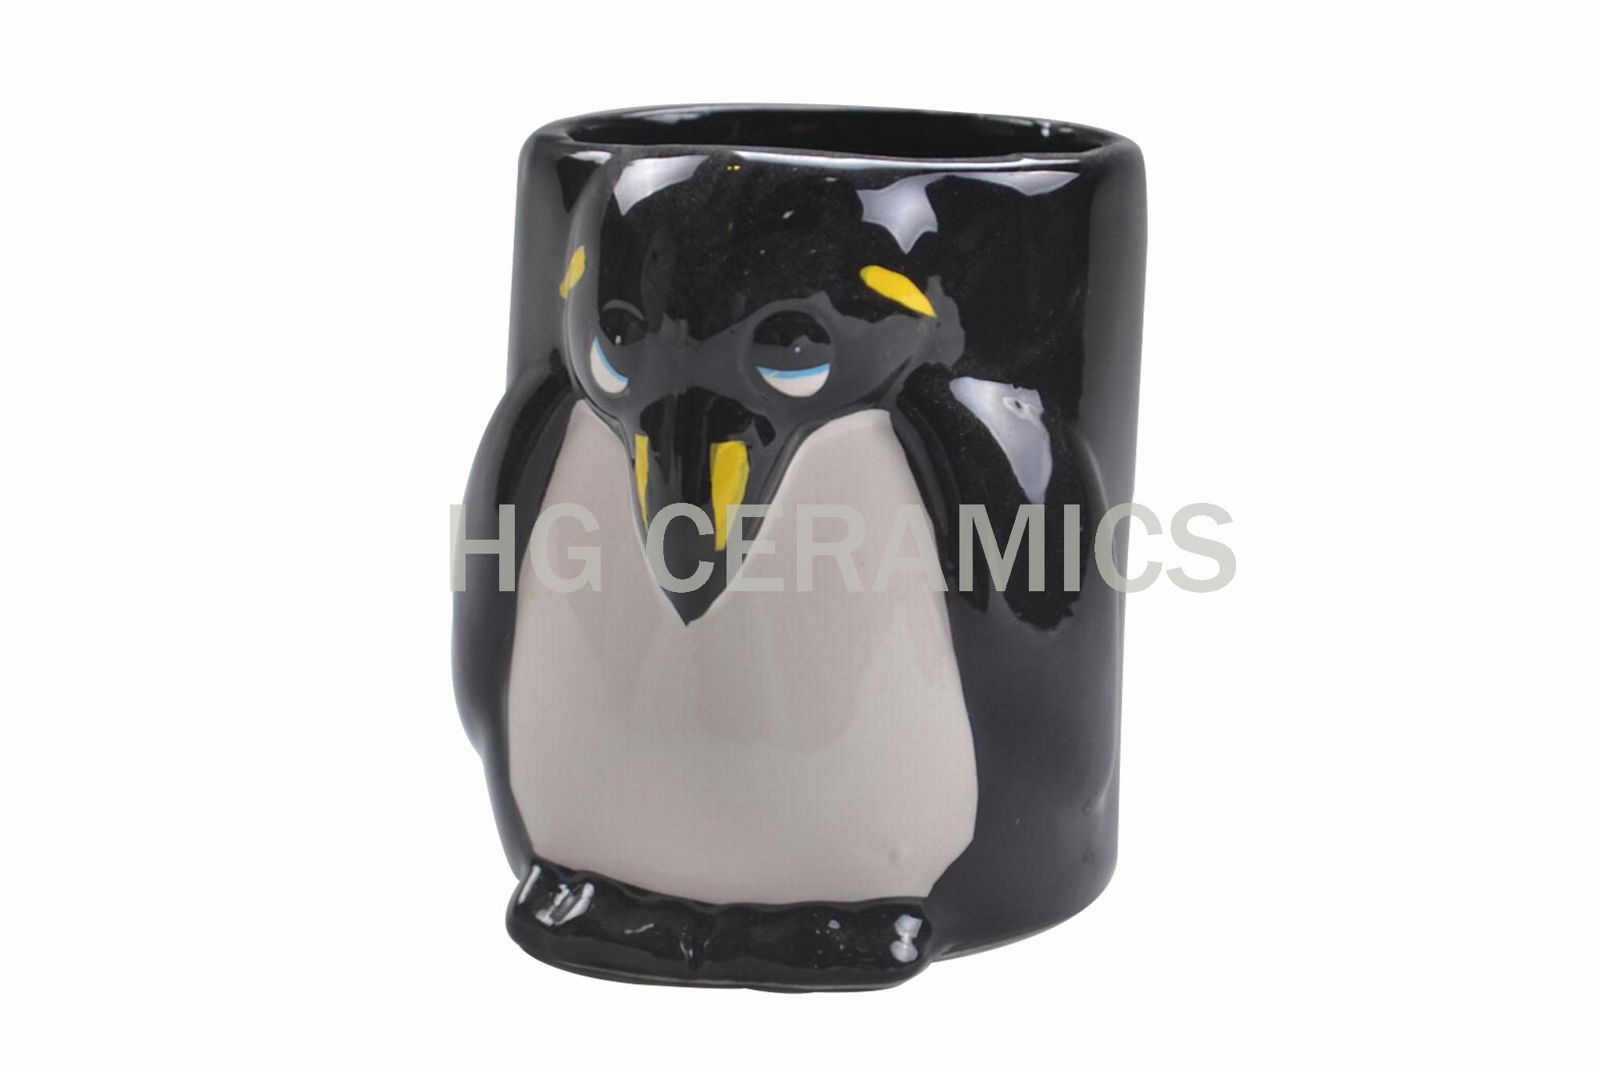 Penguin  mug  